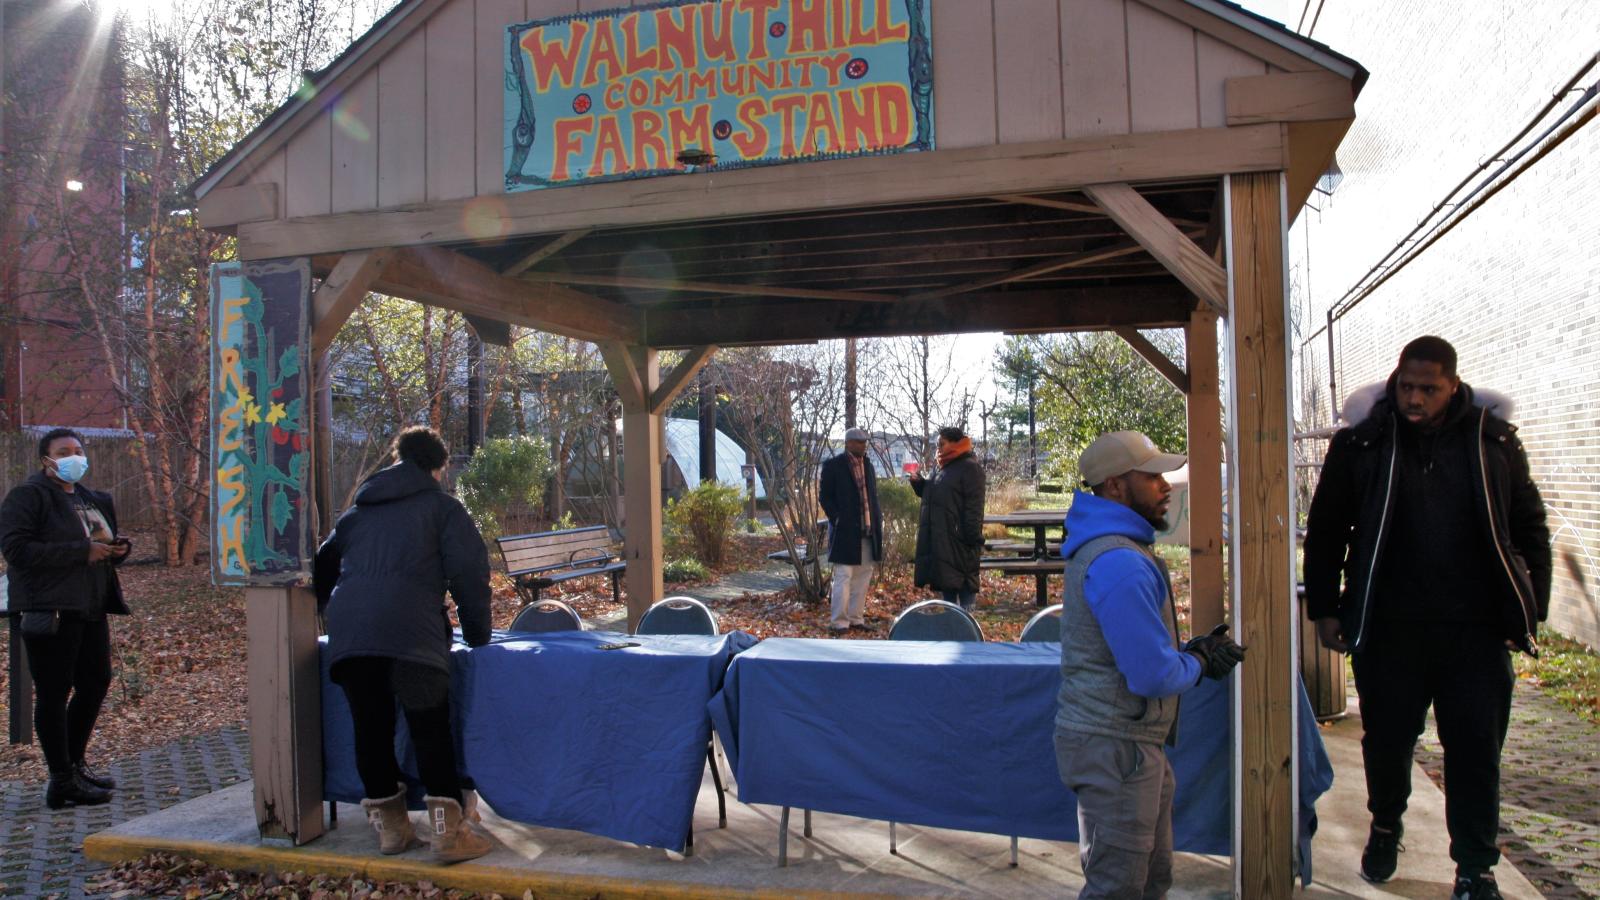 Walnut Hill Community Farm-stand being set up